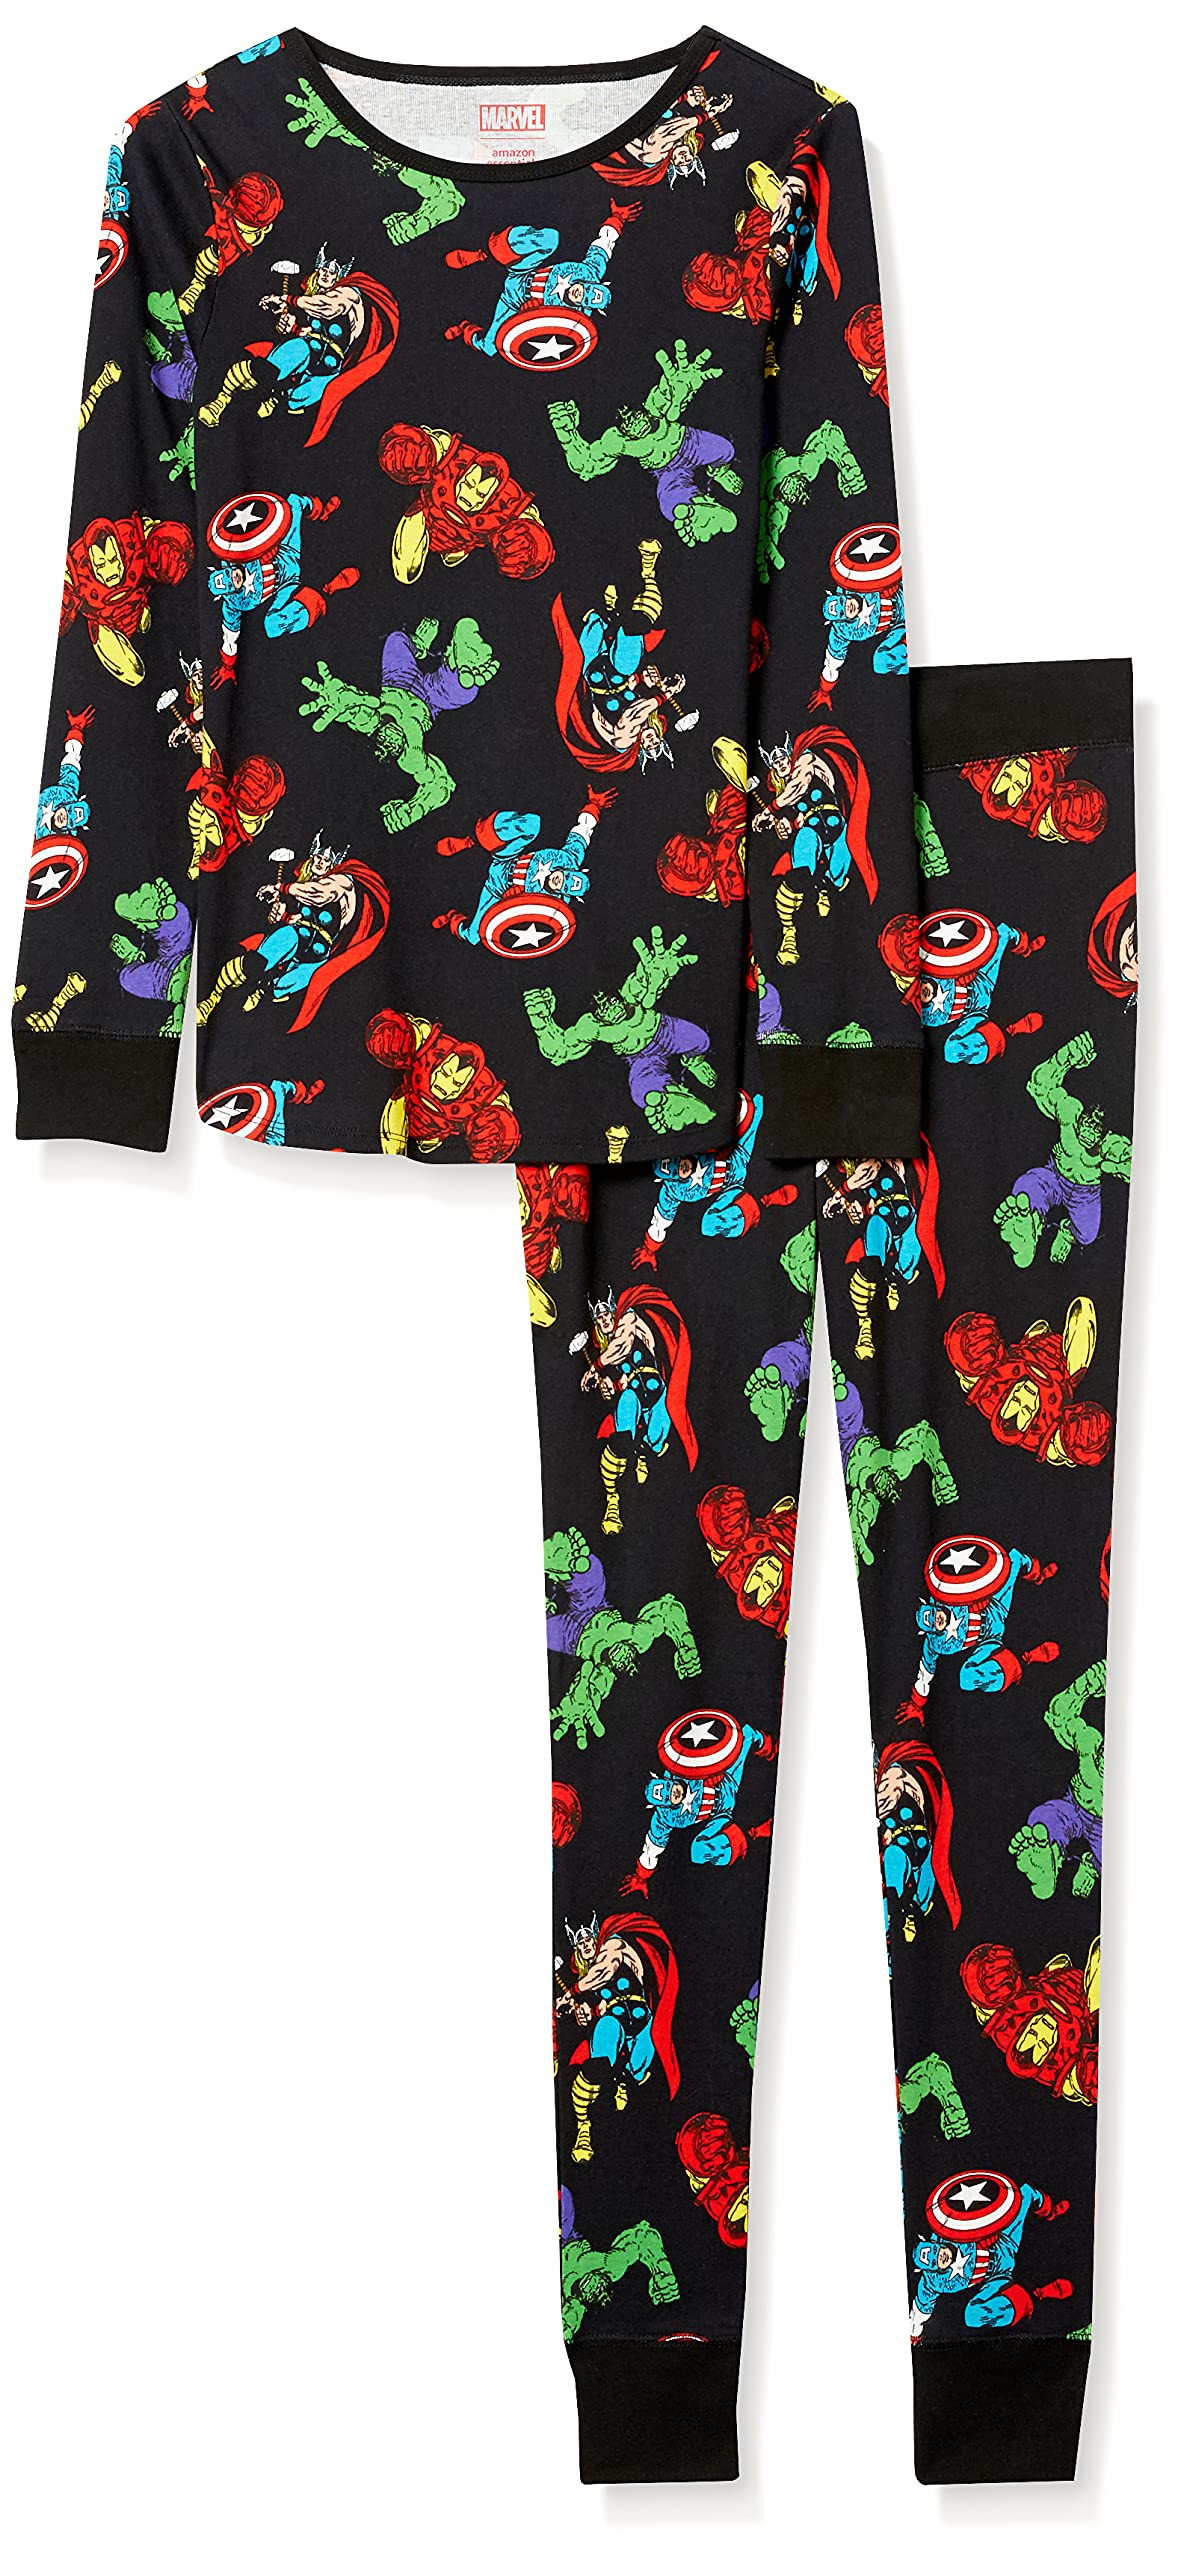 Amazon Essentials Marvel Family Matching Pajama Sleep Sets